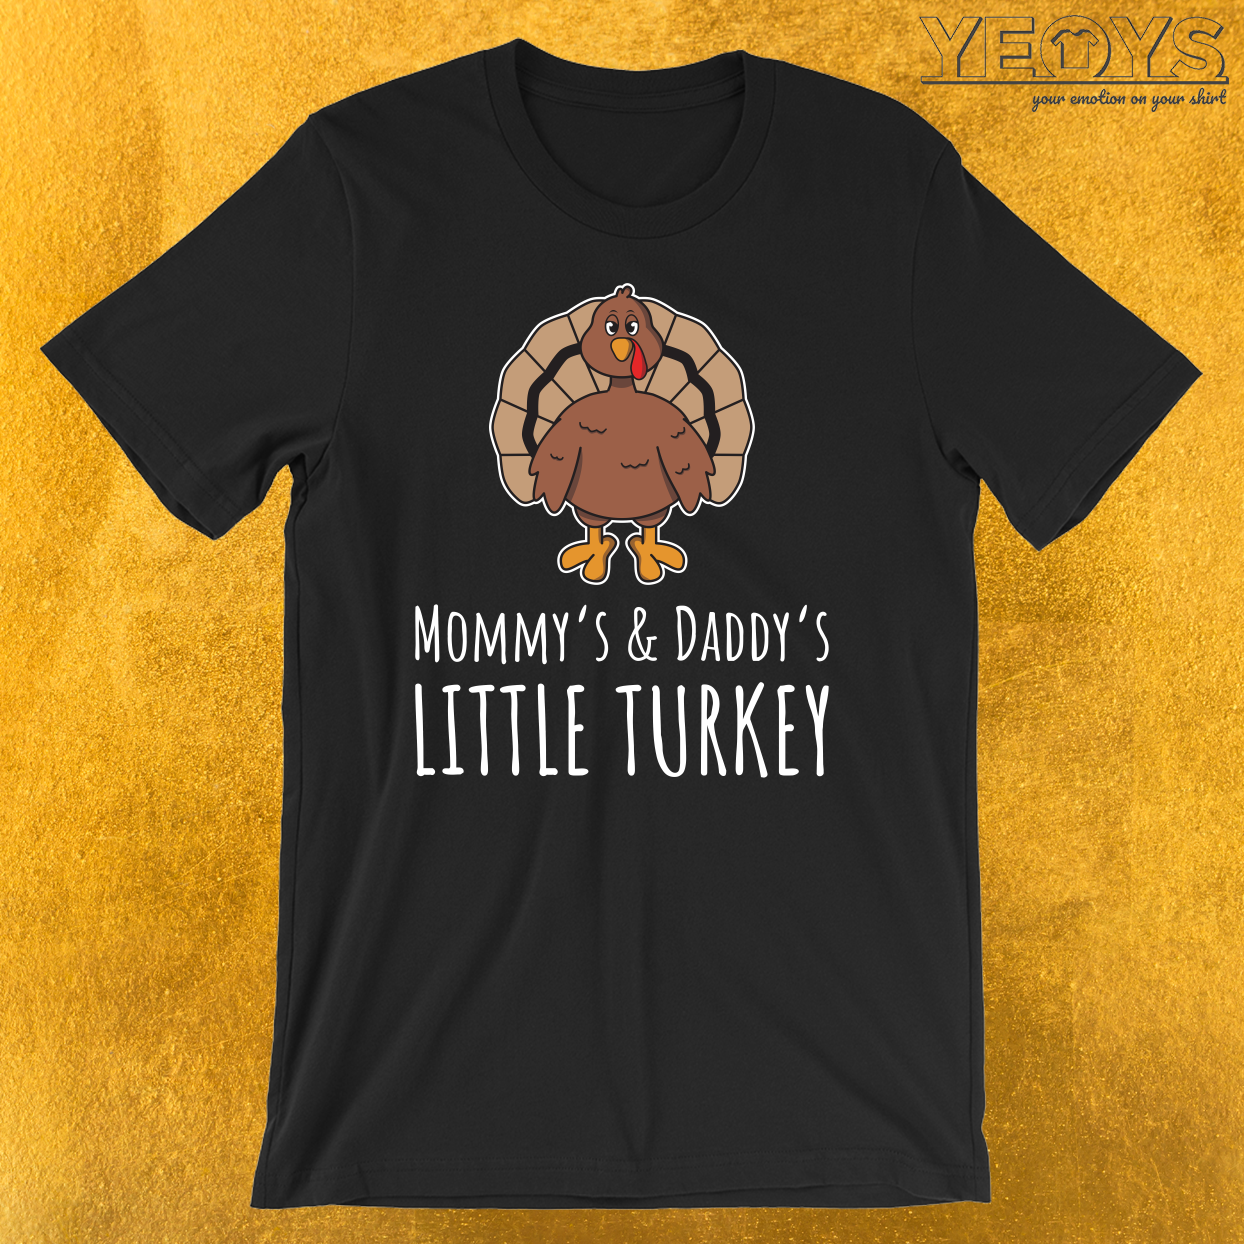 Mommy’s & Daddy’s Little Turkey T-Shirt